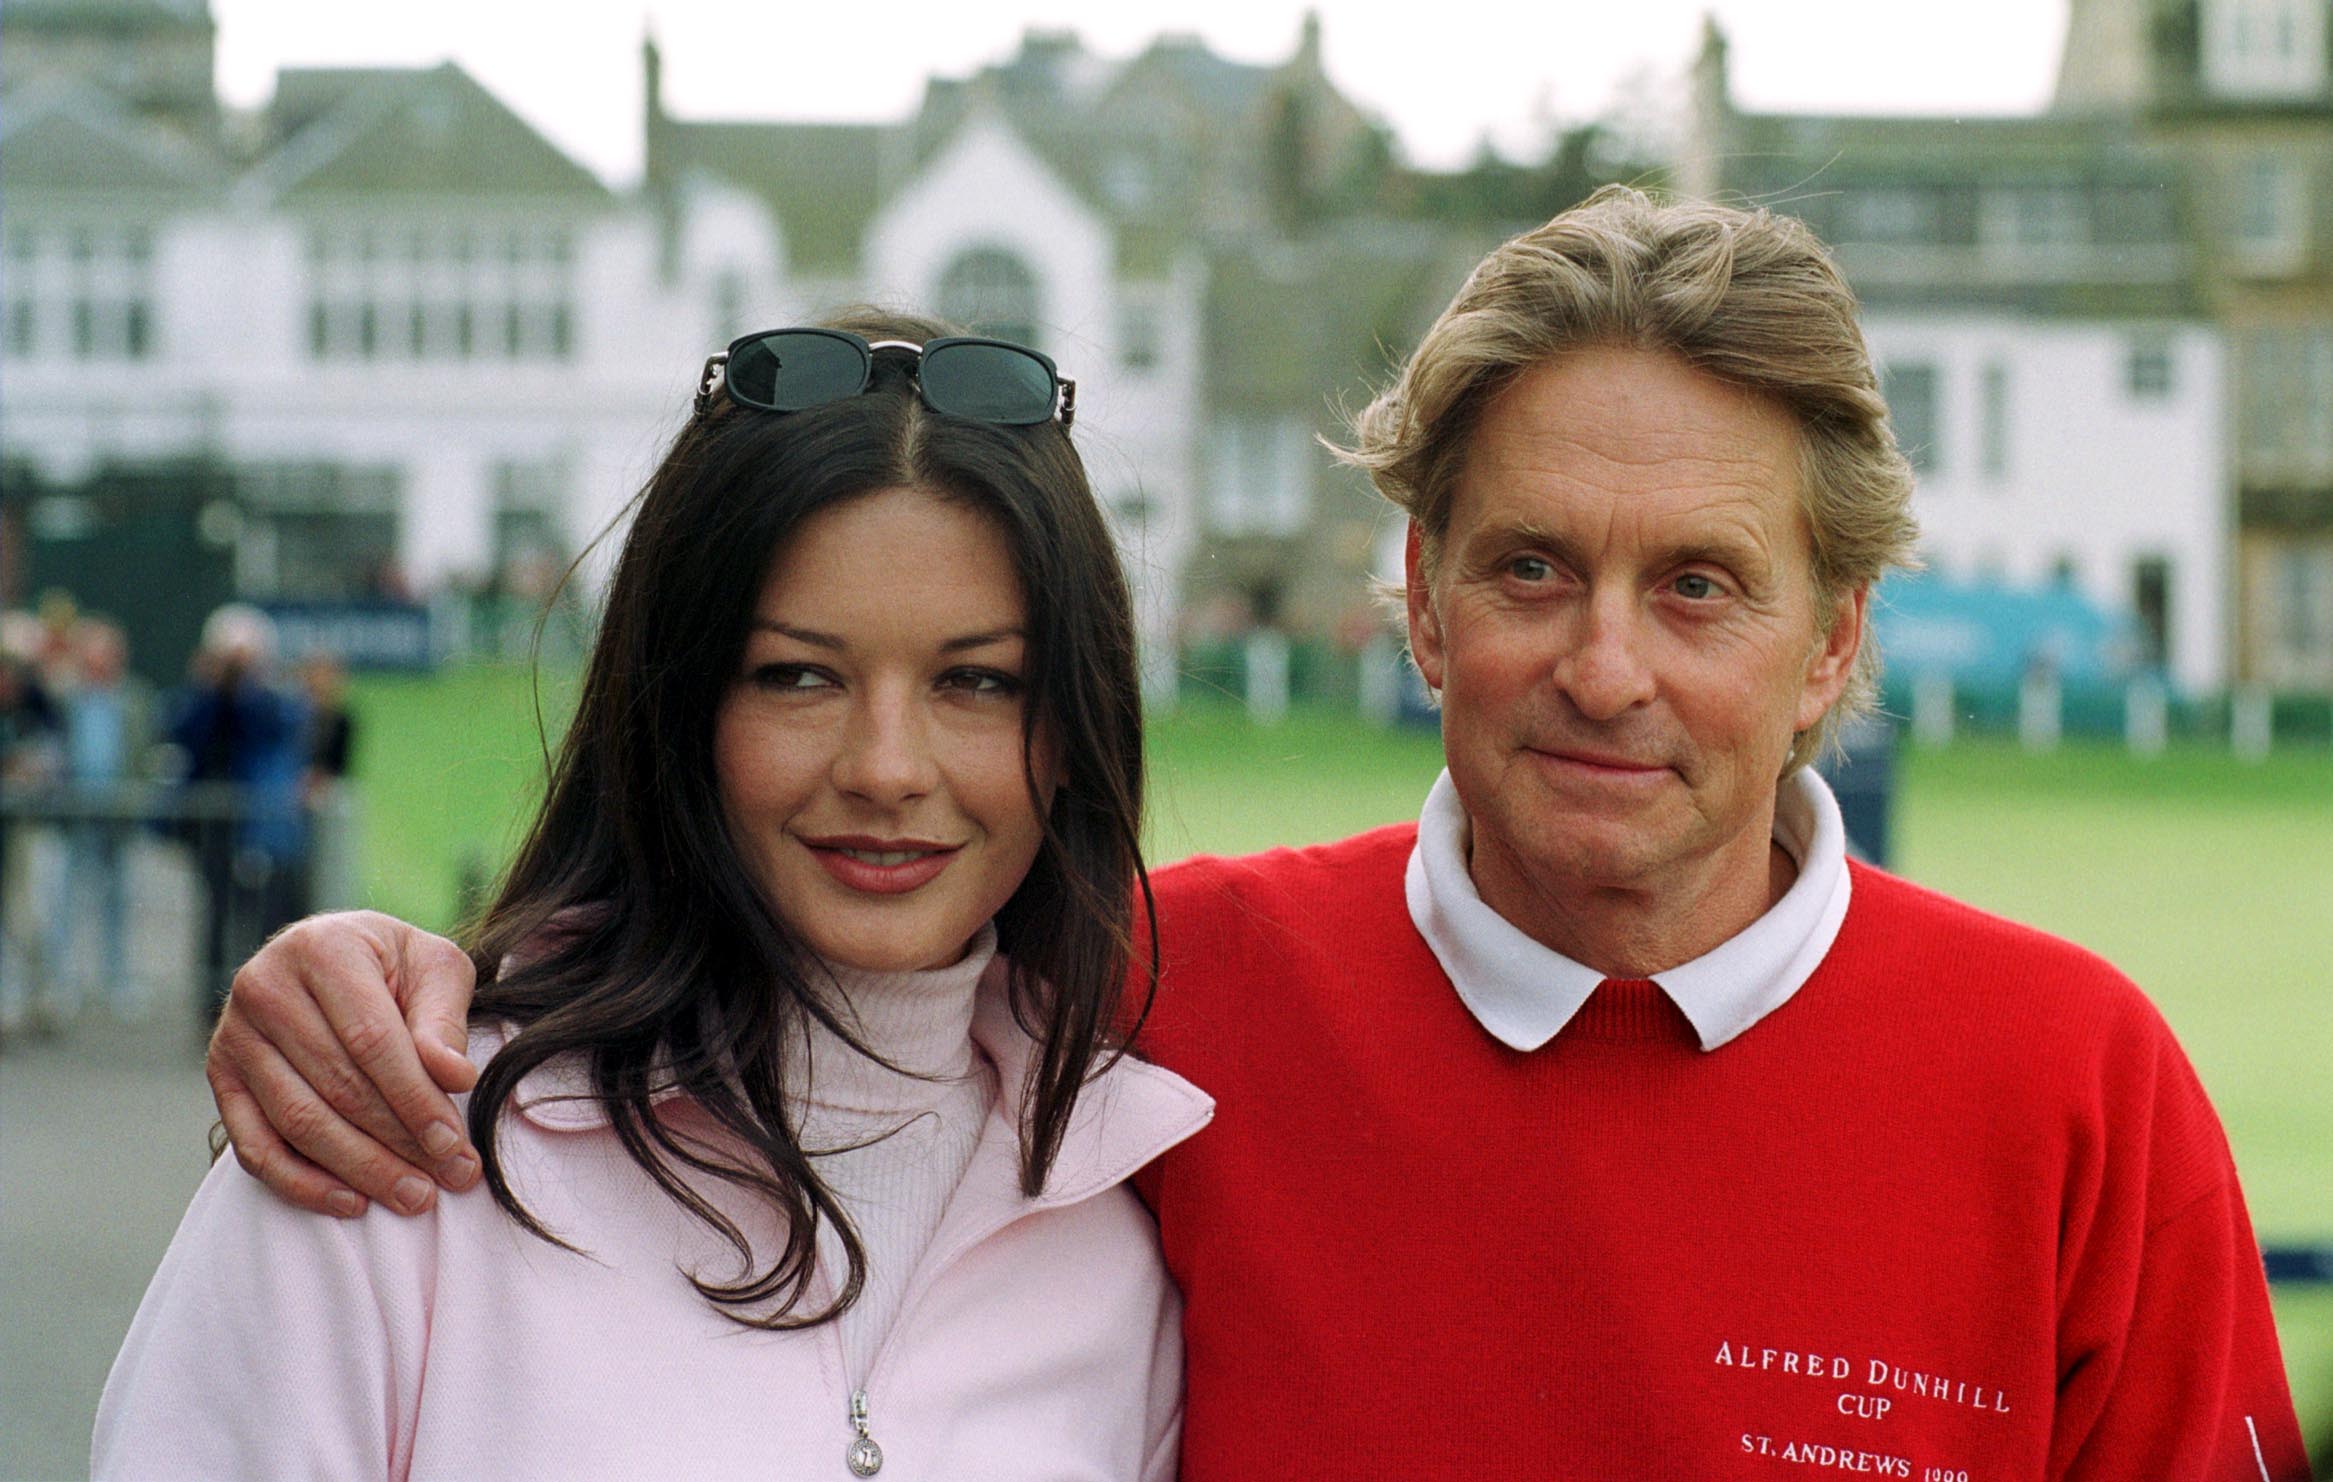 Catherine Zeta Jones und Michael Douglas entspannen sich auf dem St. Andrews Golf Course, wo Herr Douglas am 1. Juni 2000 am Alfred Dunhill Cup Pro-Am-Turnier für Prominente teilnahm. | Quelle: Getty Images